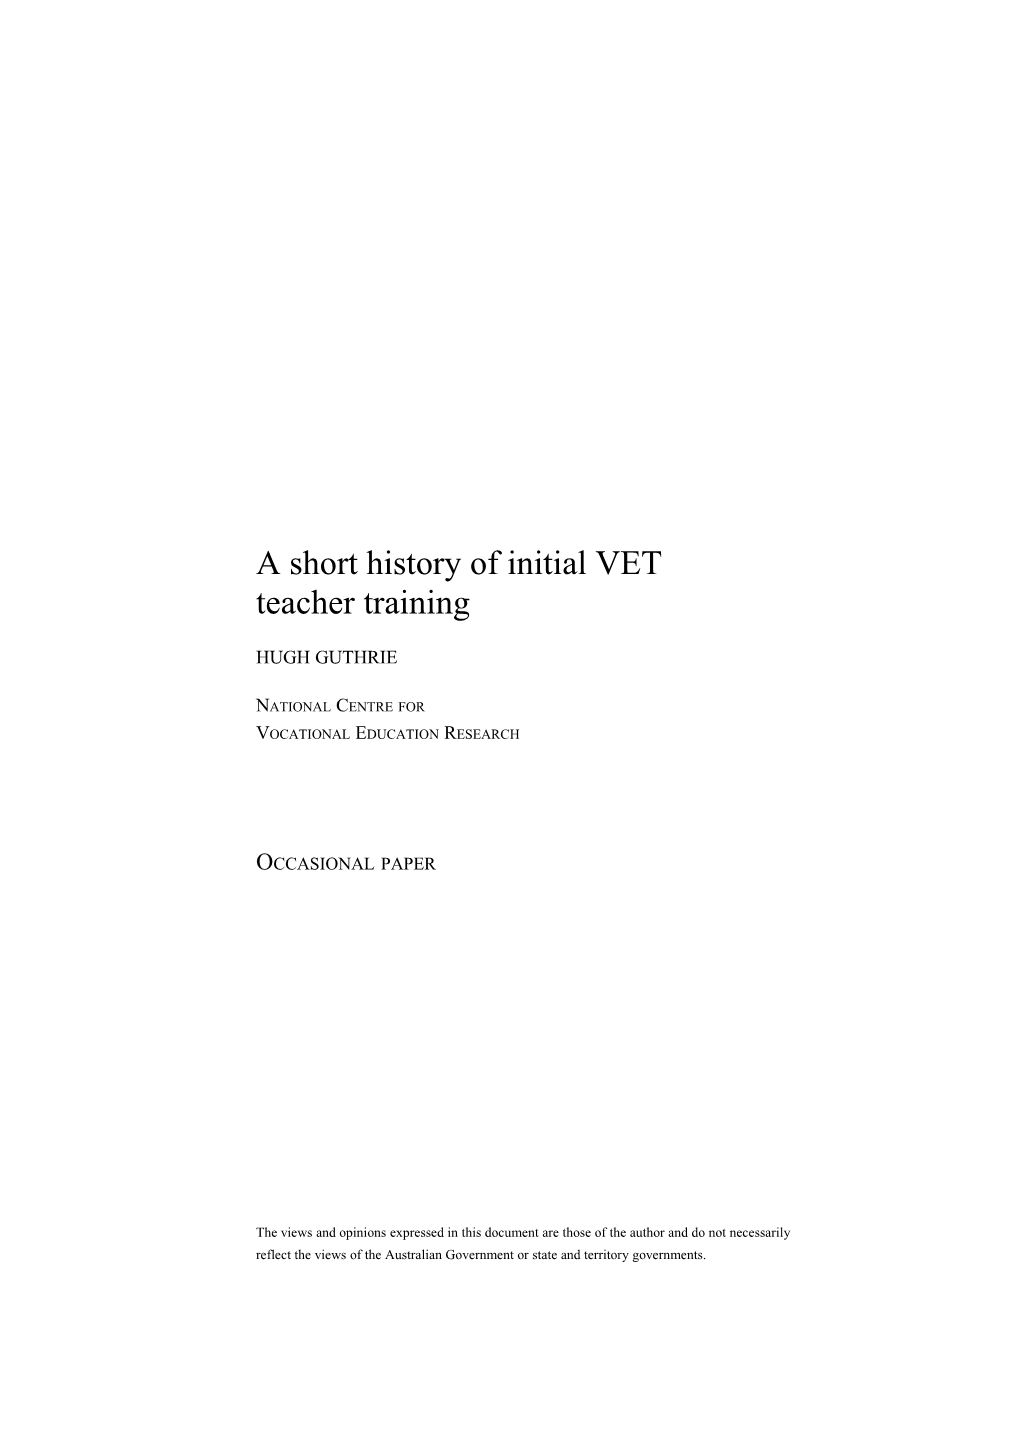 A Short History of Initial VET Teachertraining